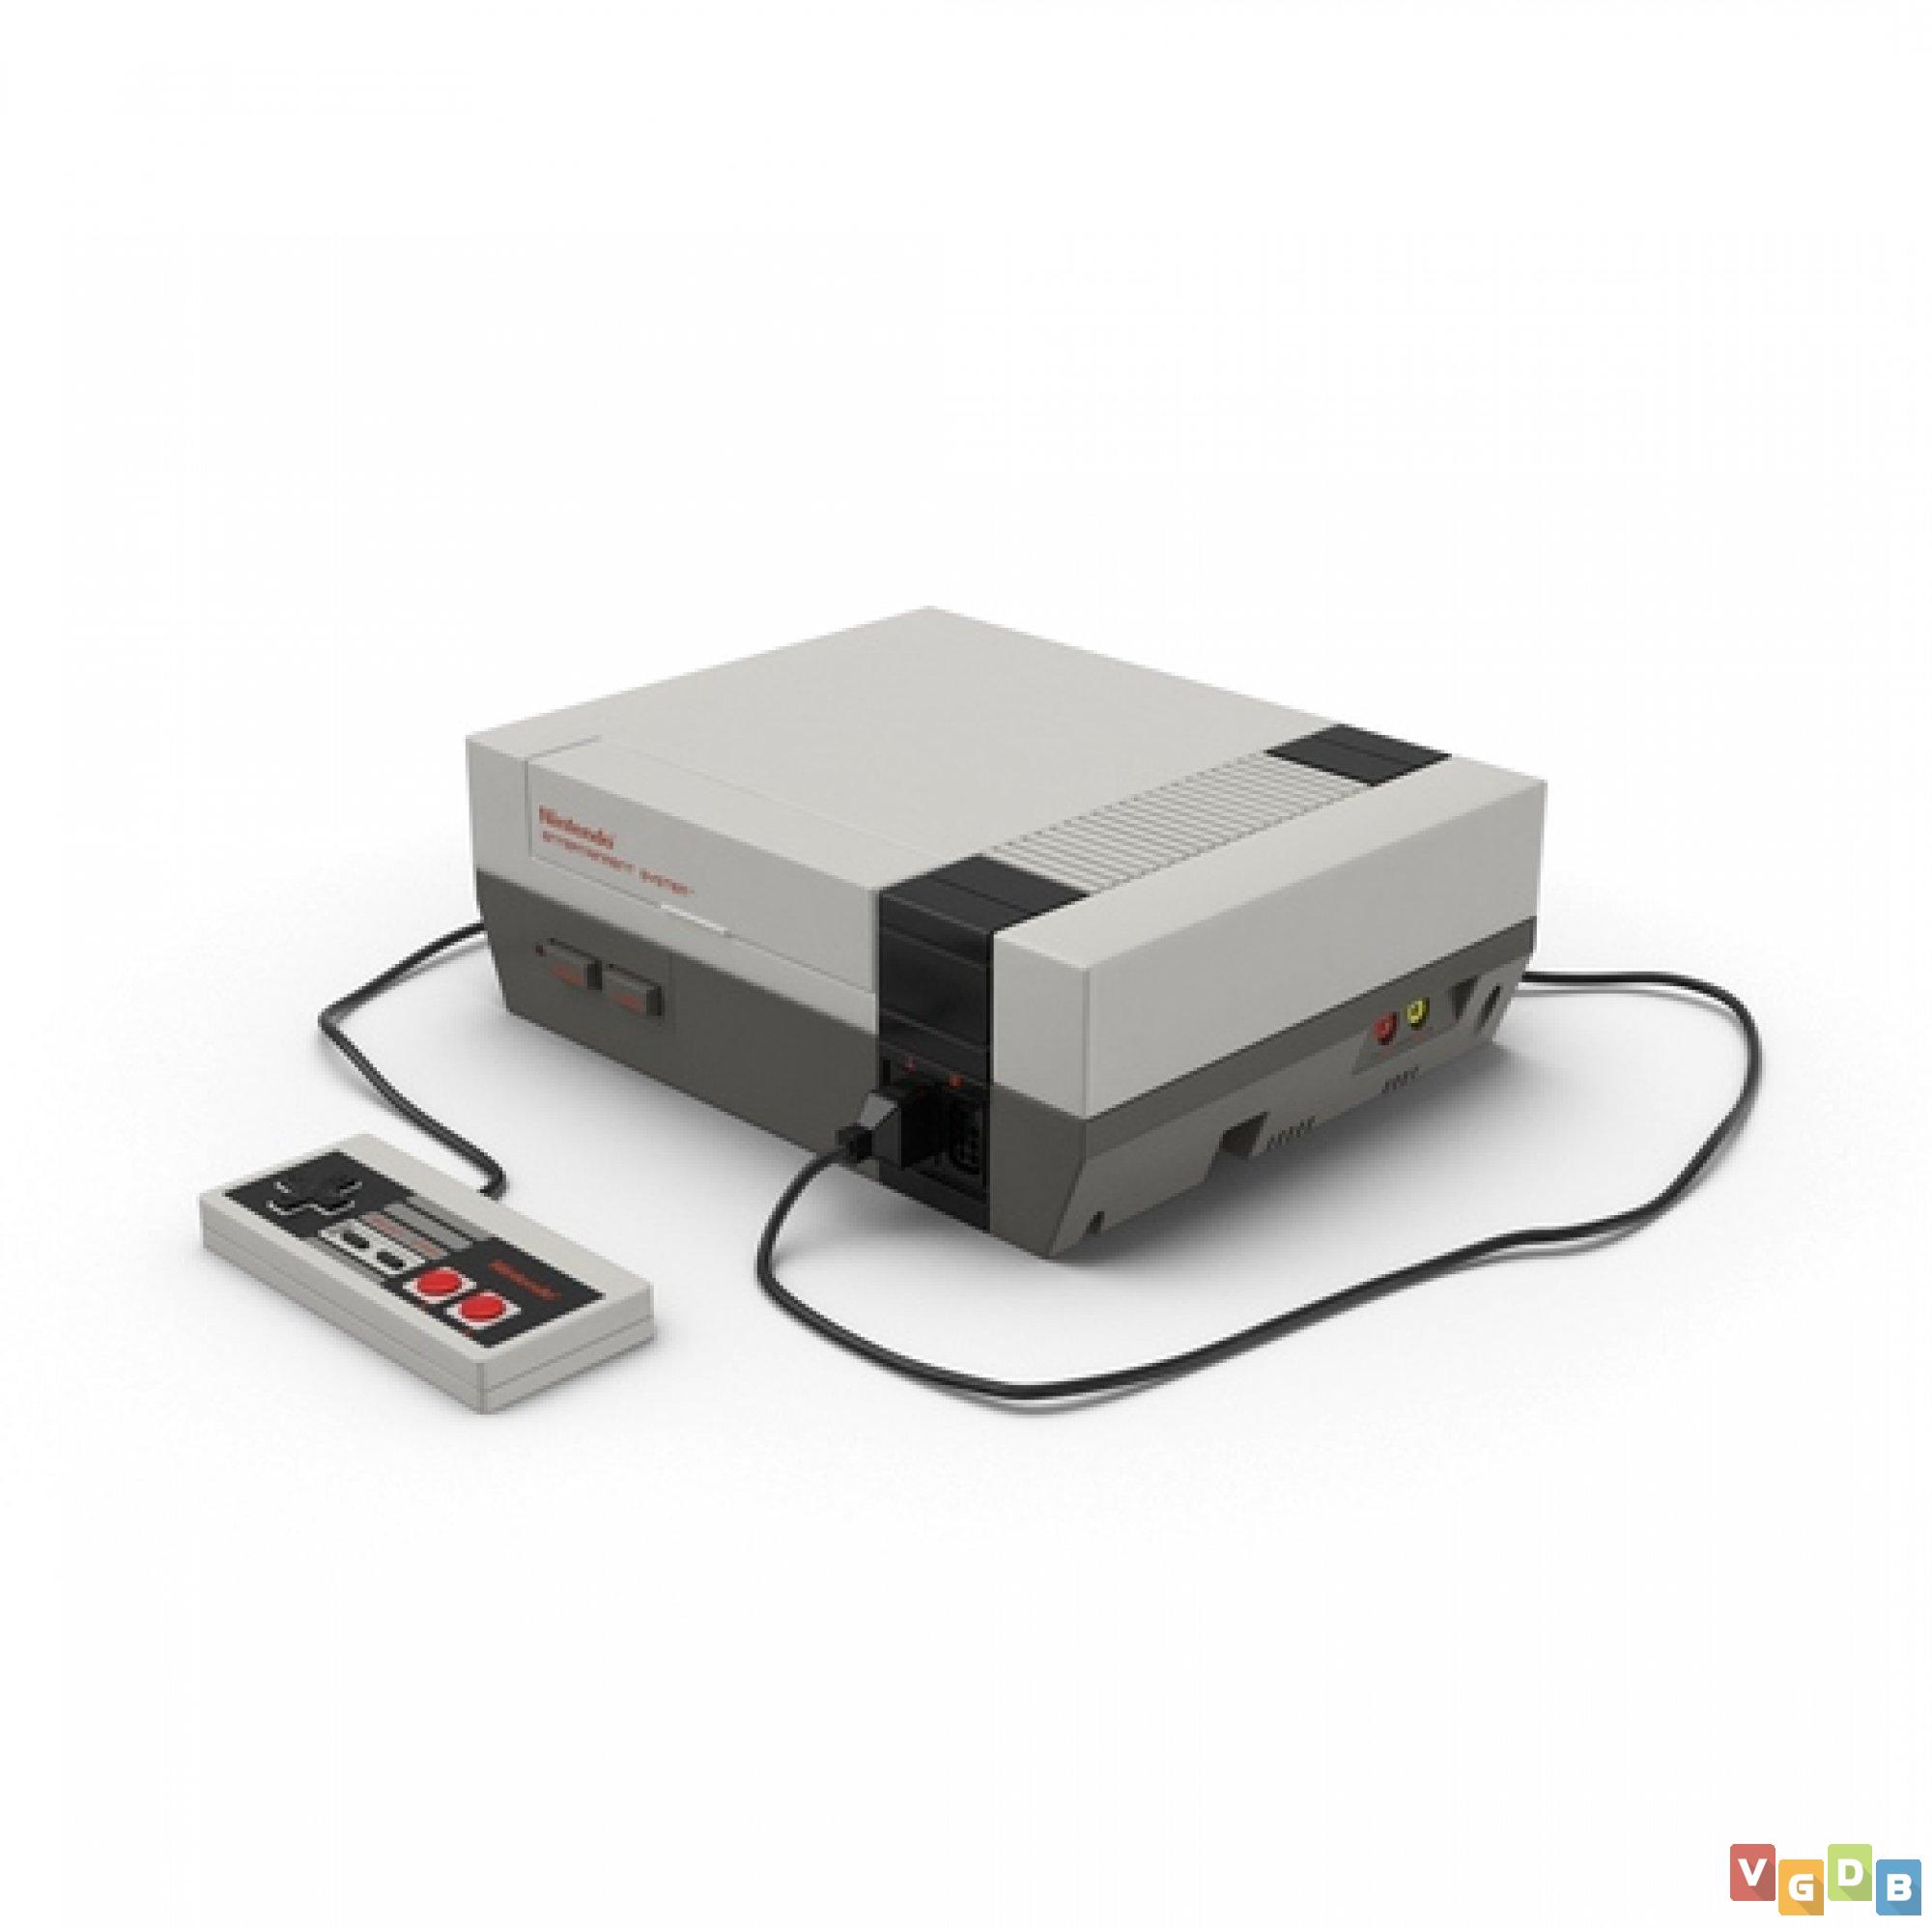 RoboCop-Cartucho de jogo para videogame NES, 1, 2, 3, RoboCop e